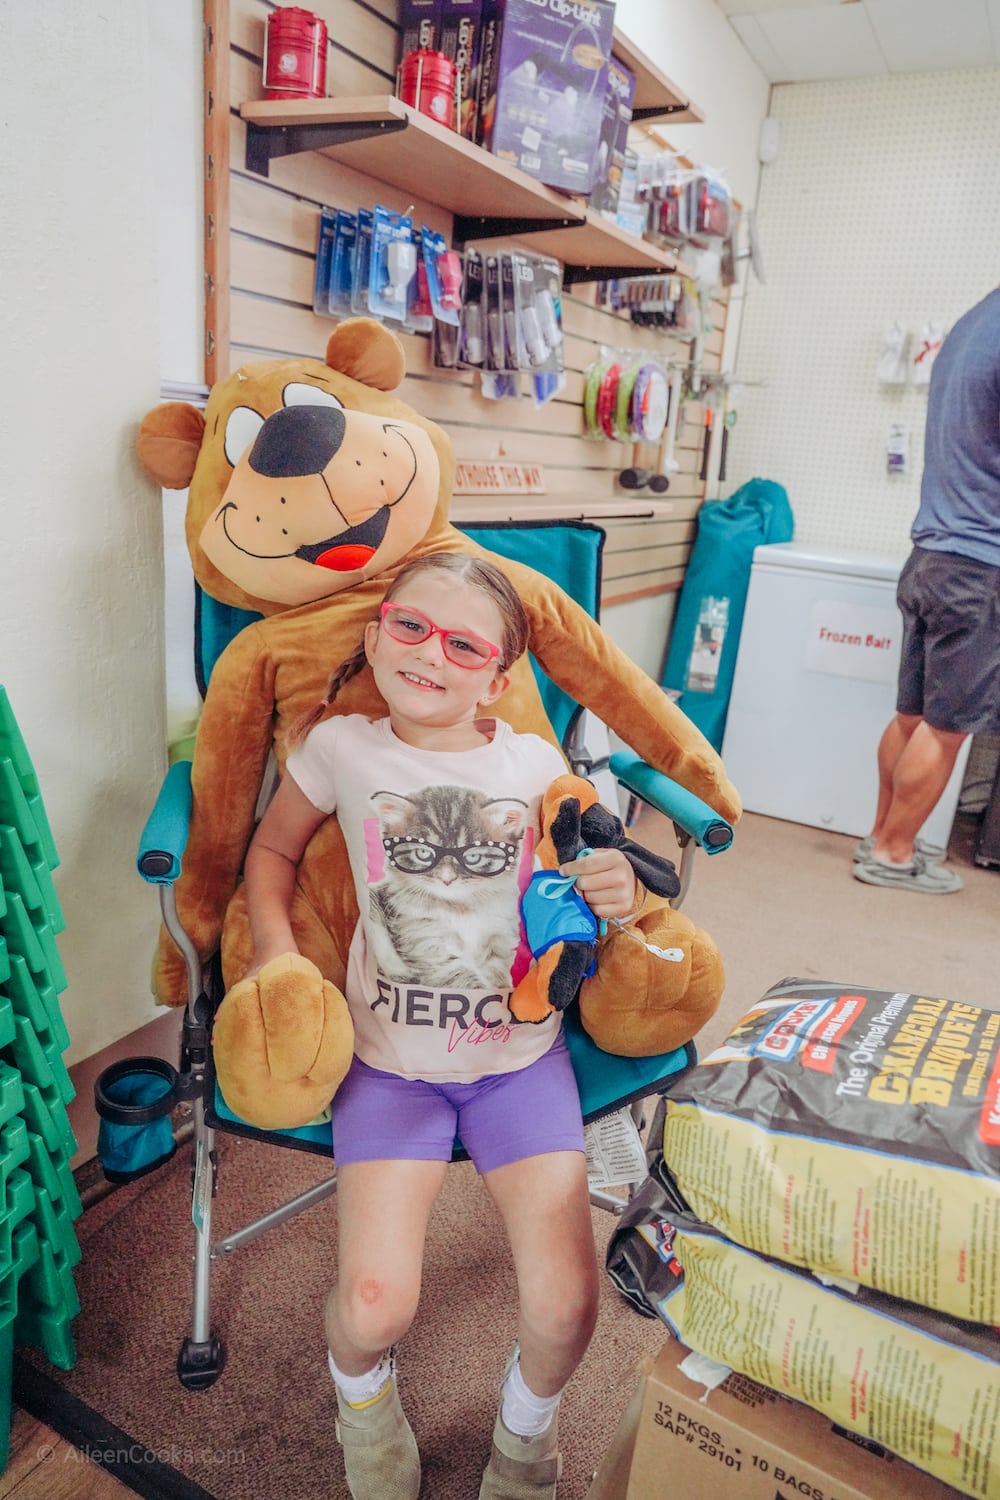 A little girl sitting on a giant stuffed bear. 